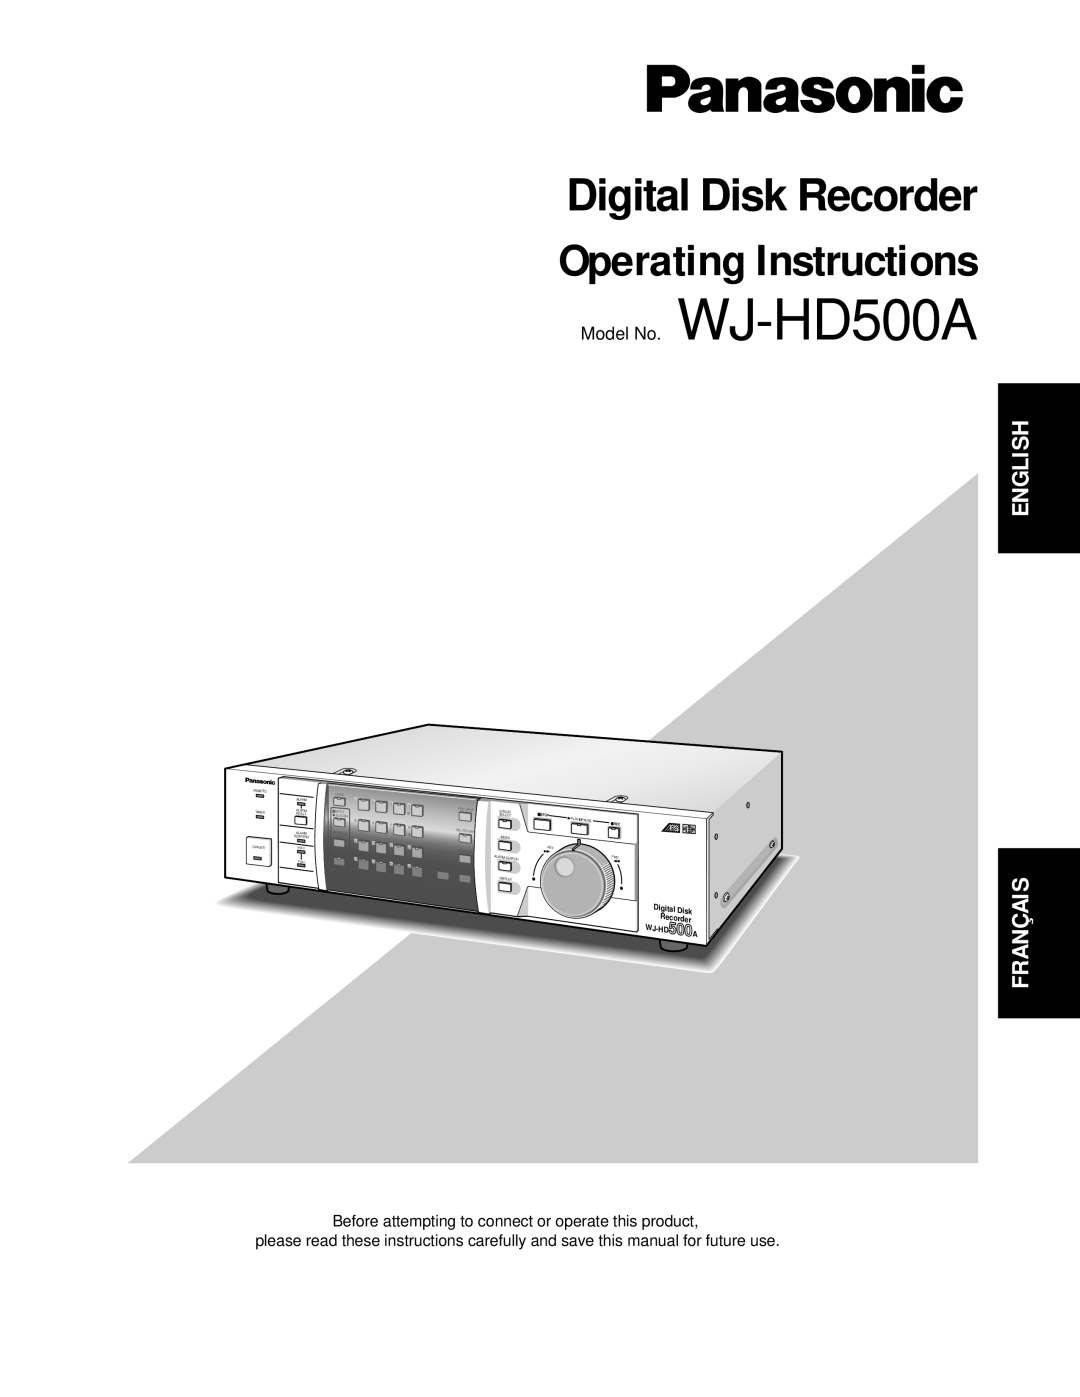 Panasonic manual English, Français, Model No. WJ-HD500A, Operating Instructions, Digital Disk Recorder, Lock, Spot 